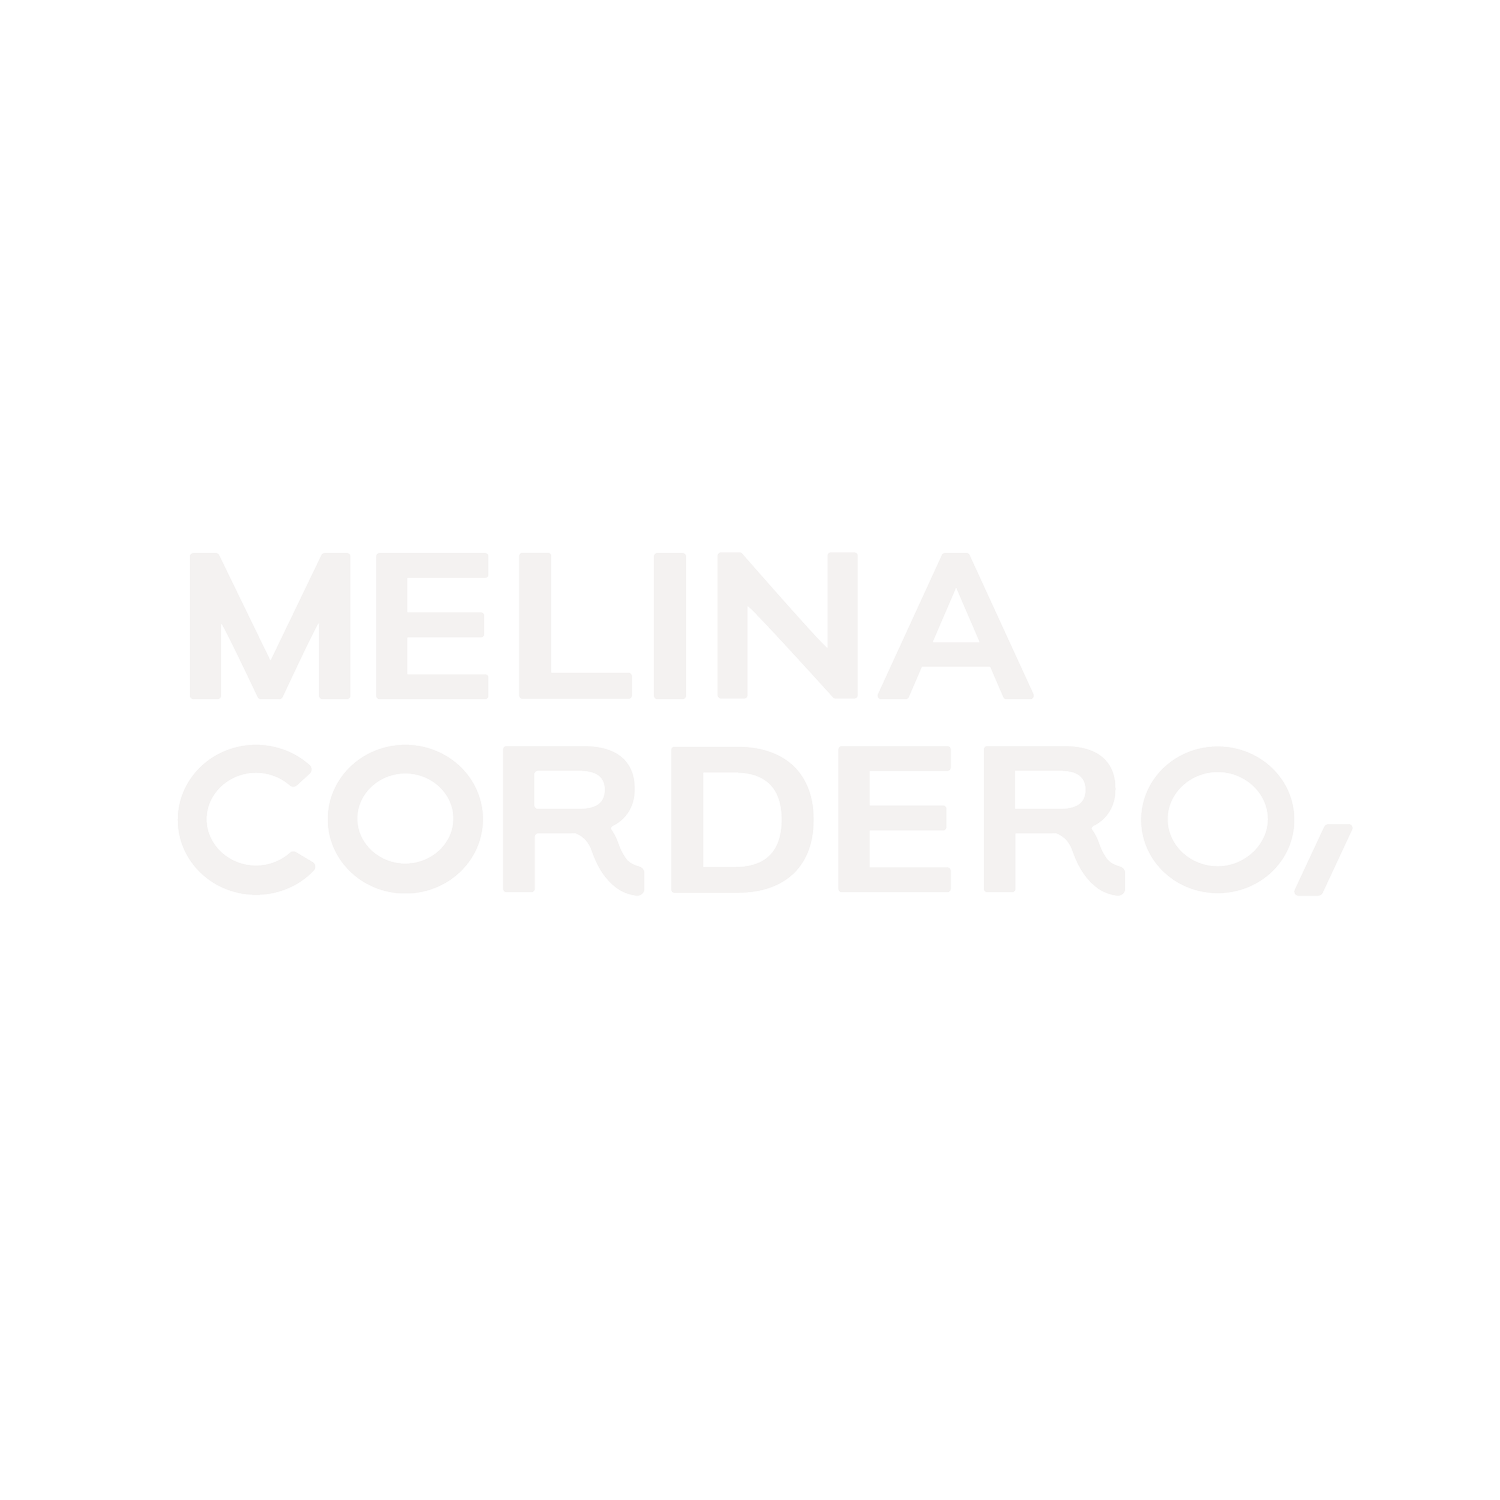 Melina Cordero